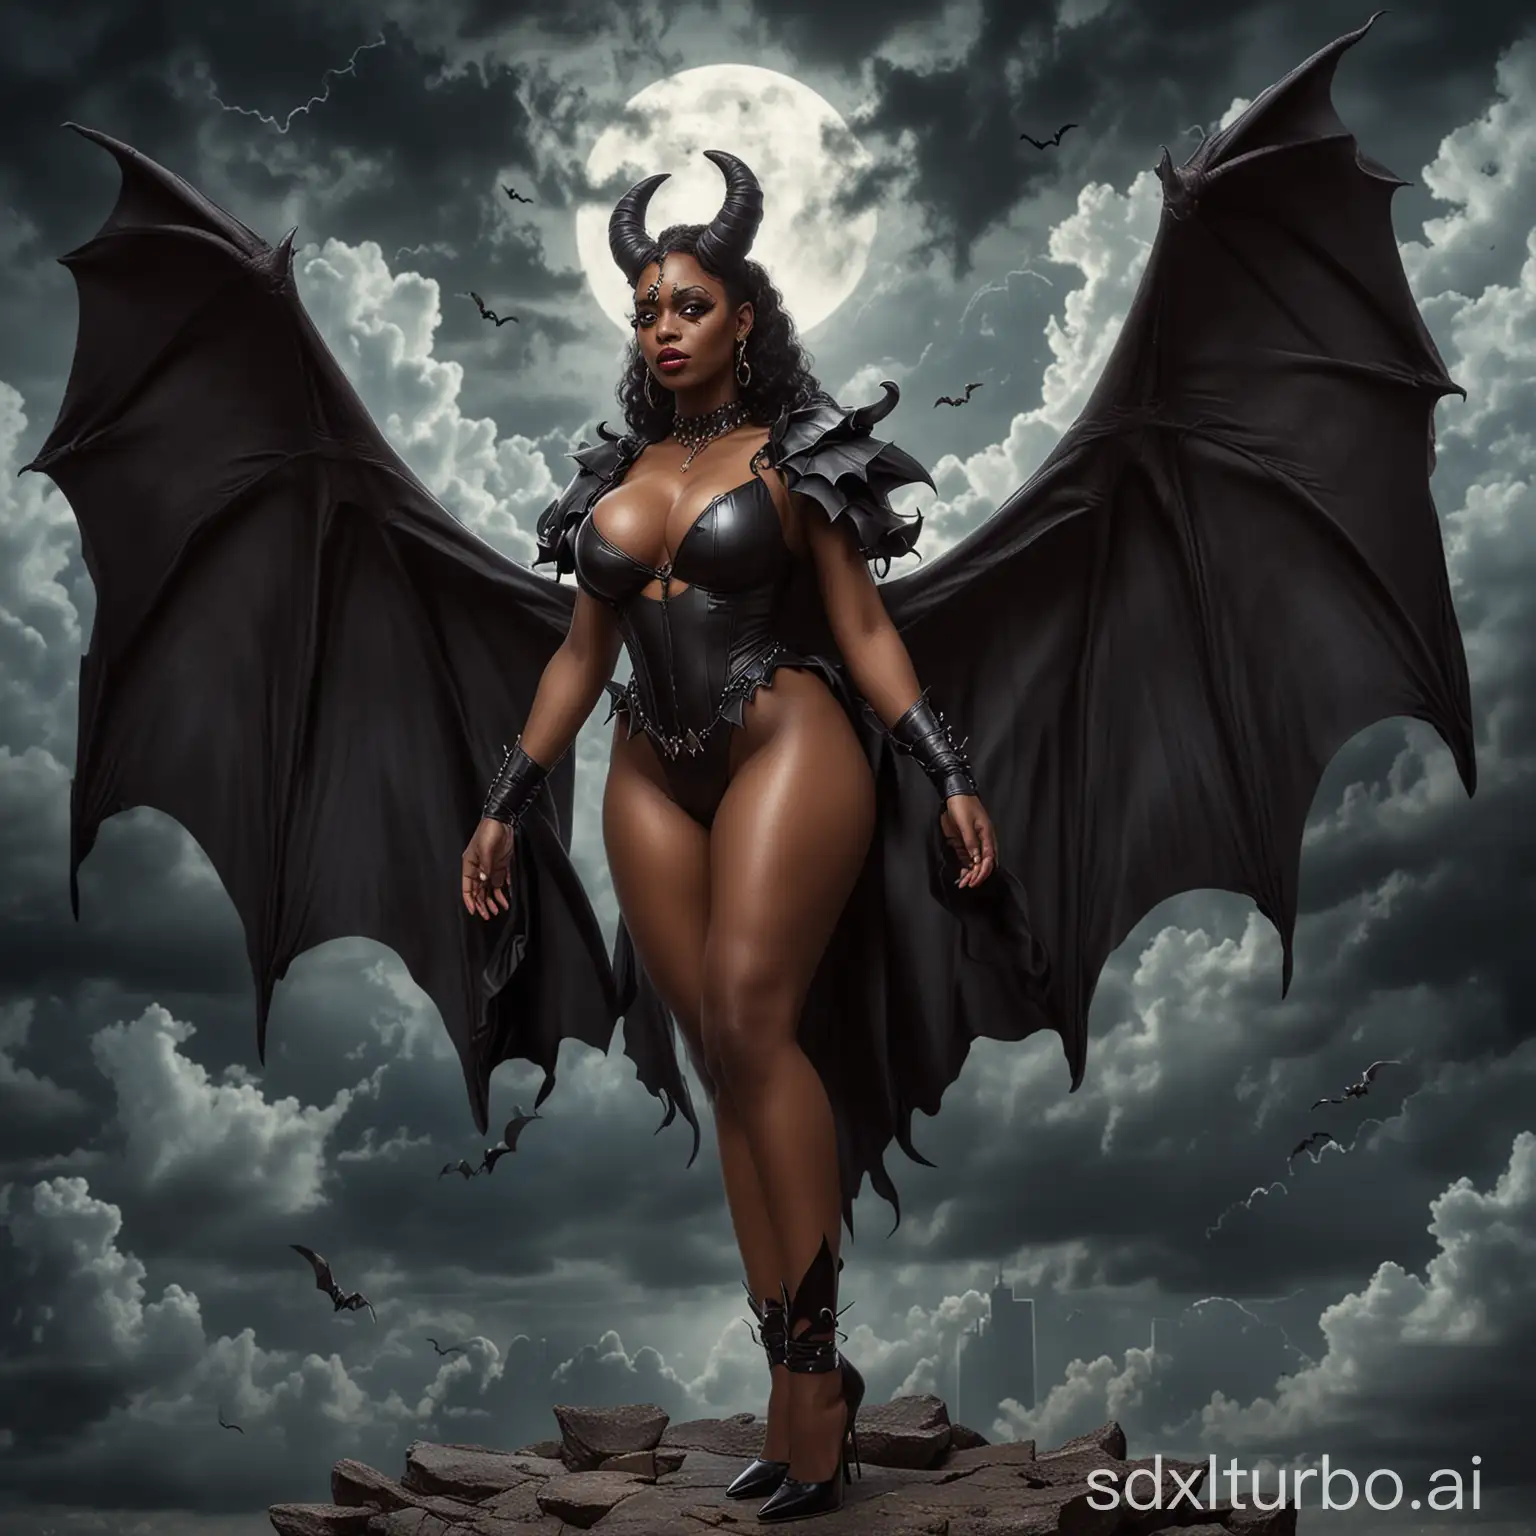 Seductive-Demoness-with-Bat-Wings-and-Horns-in-High-Heels-under-Ominous-Skies